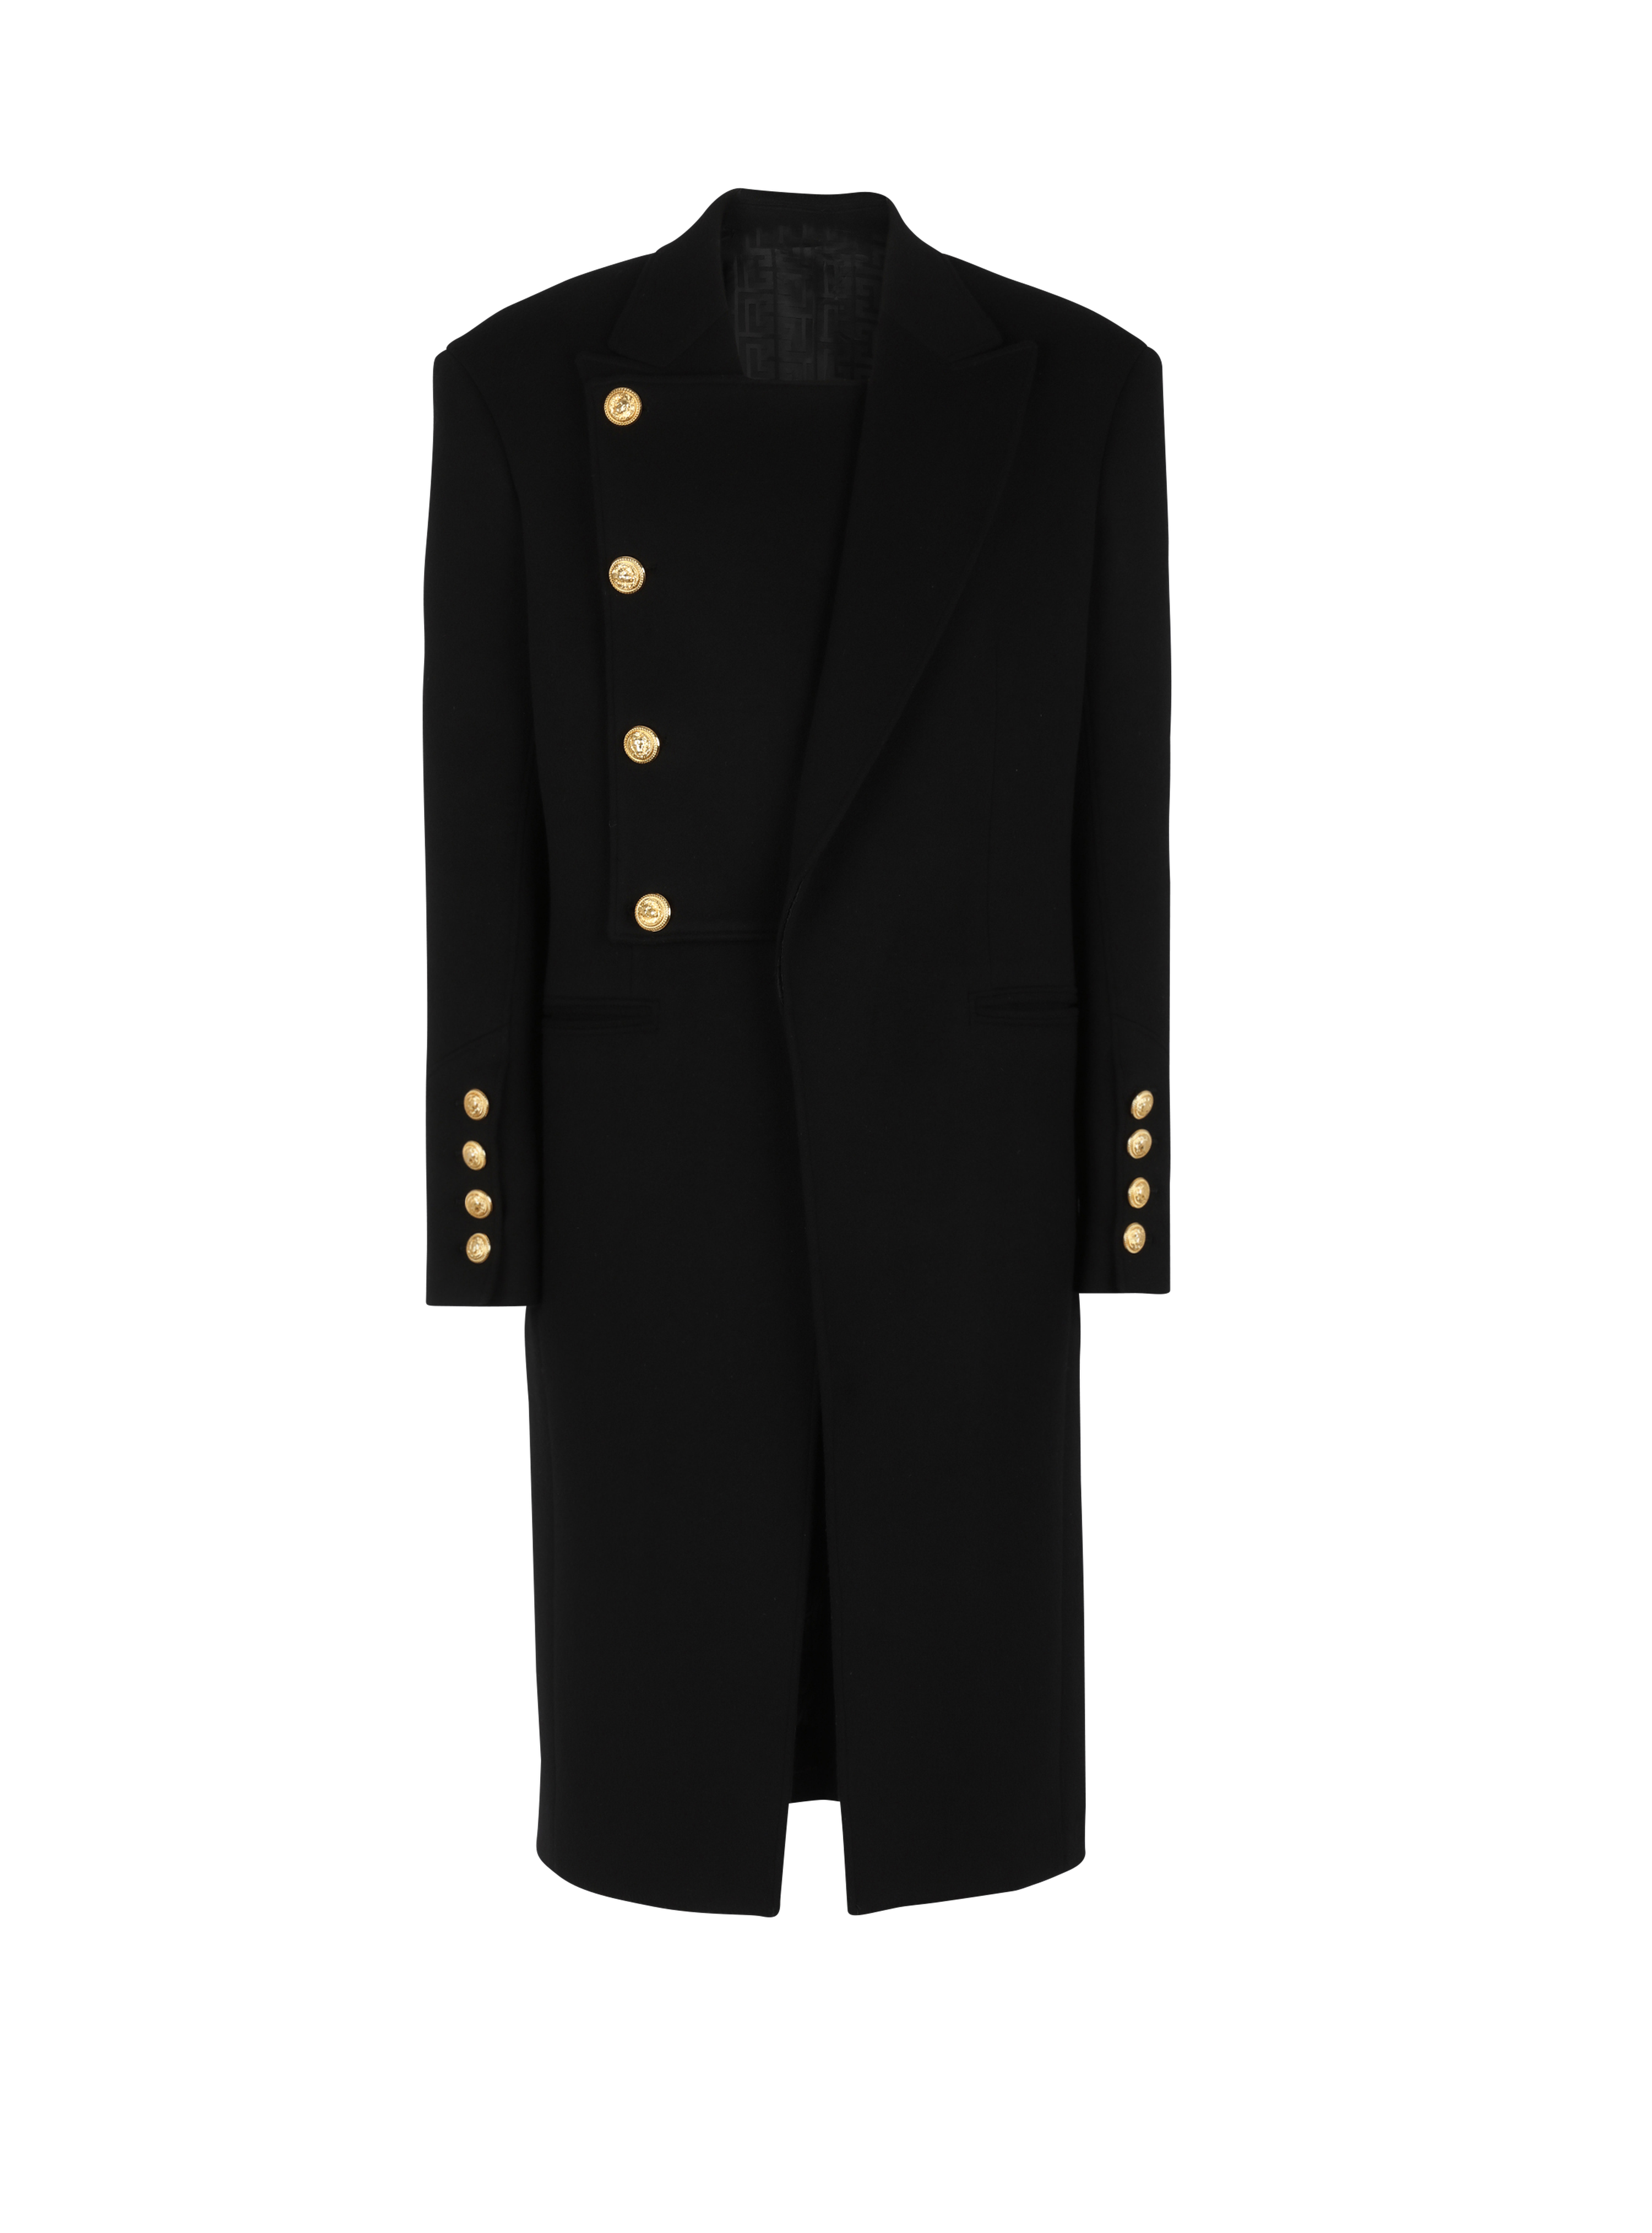 Unisex - Four-button wool coat with detachable inset jacket, black